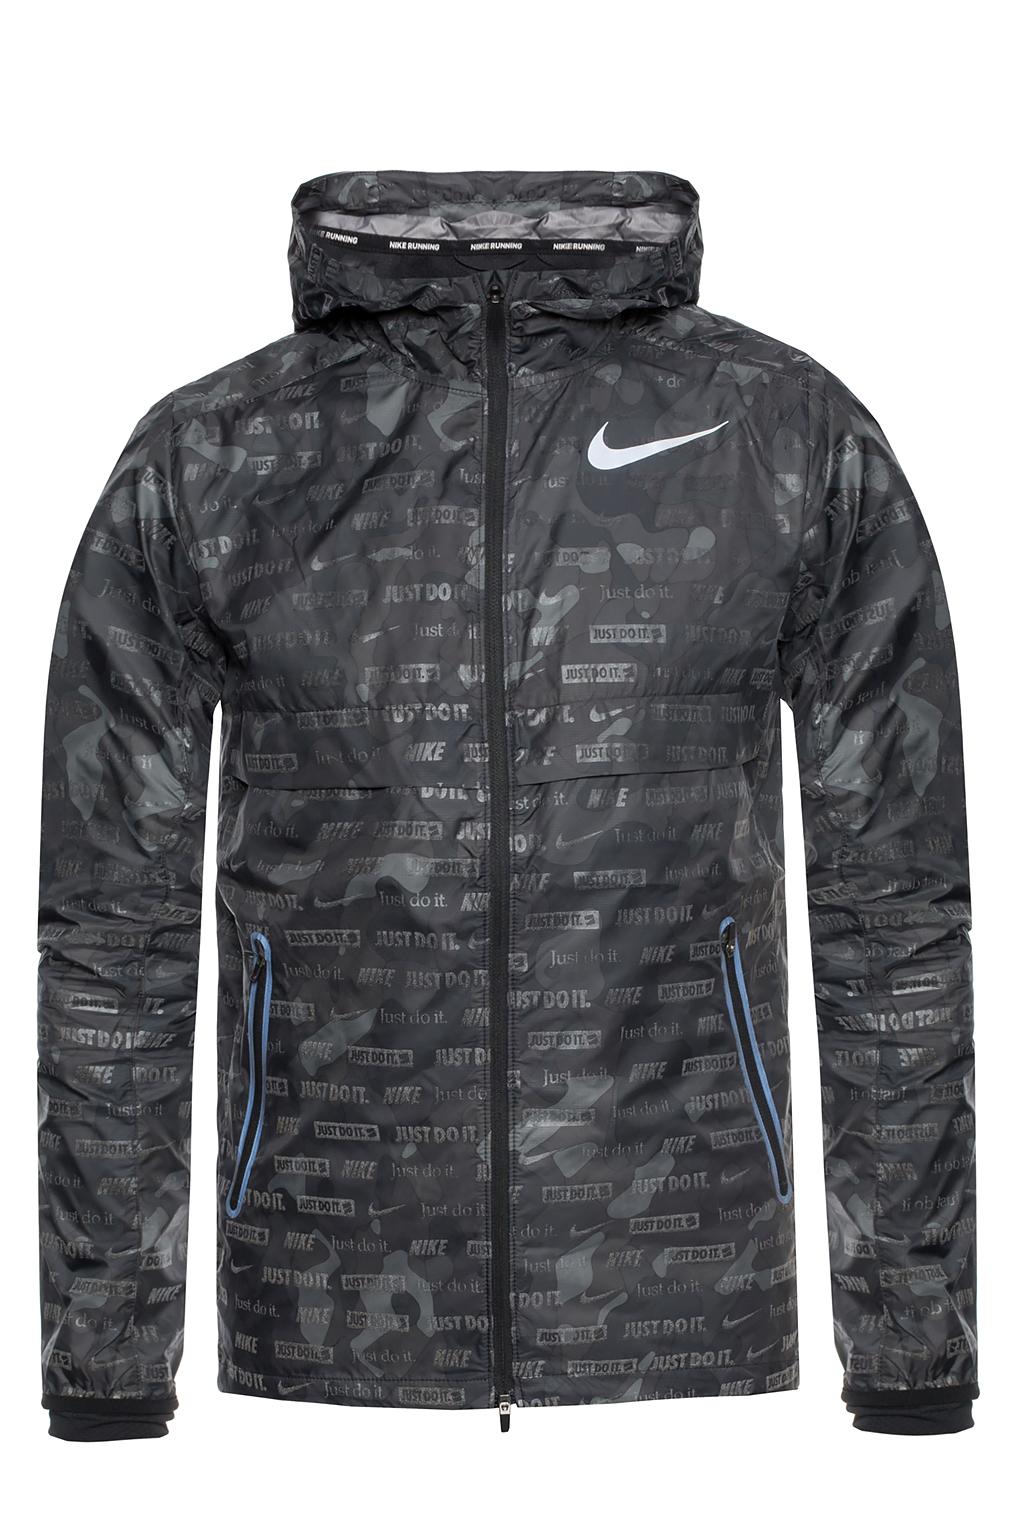 Camo rain jacket Nike - Vitkac US